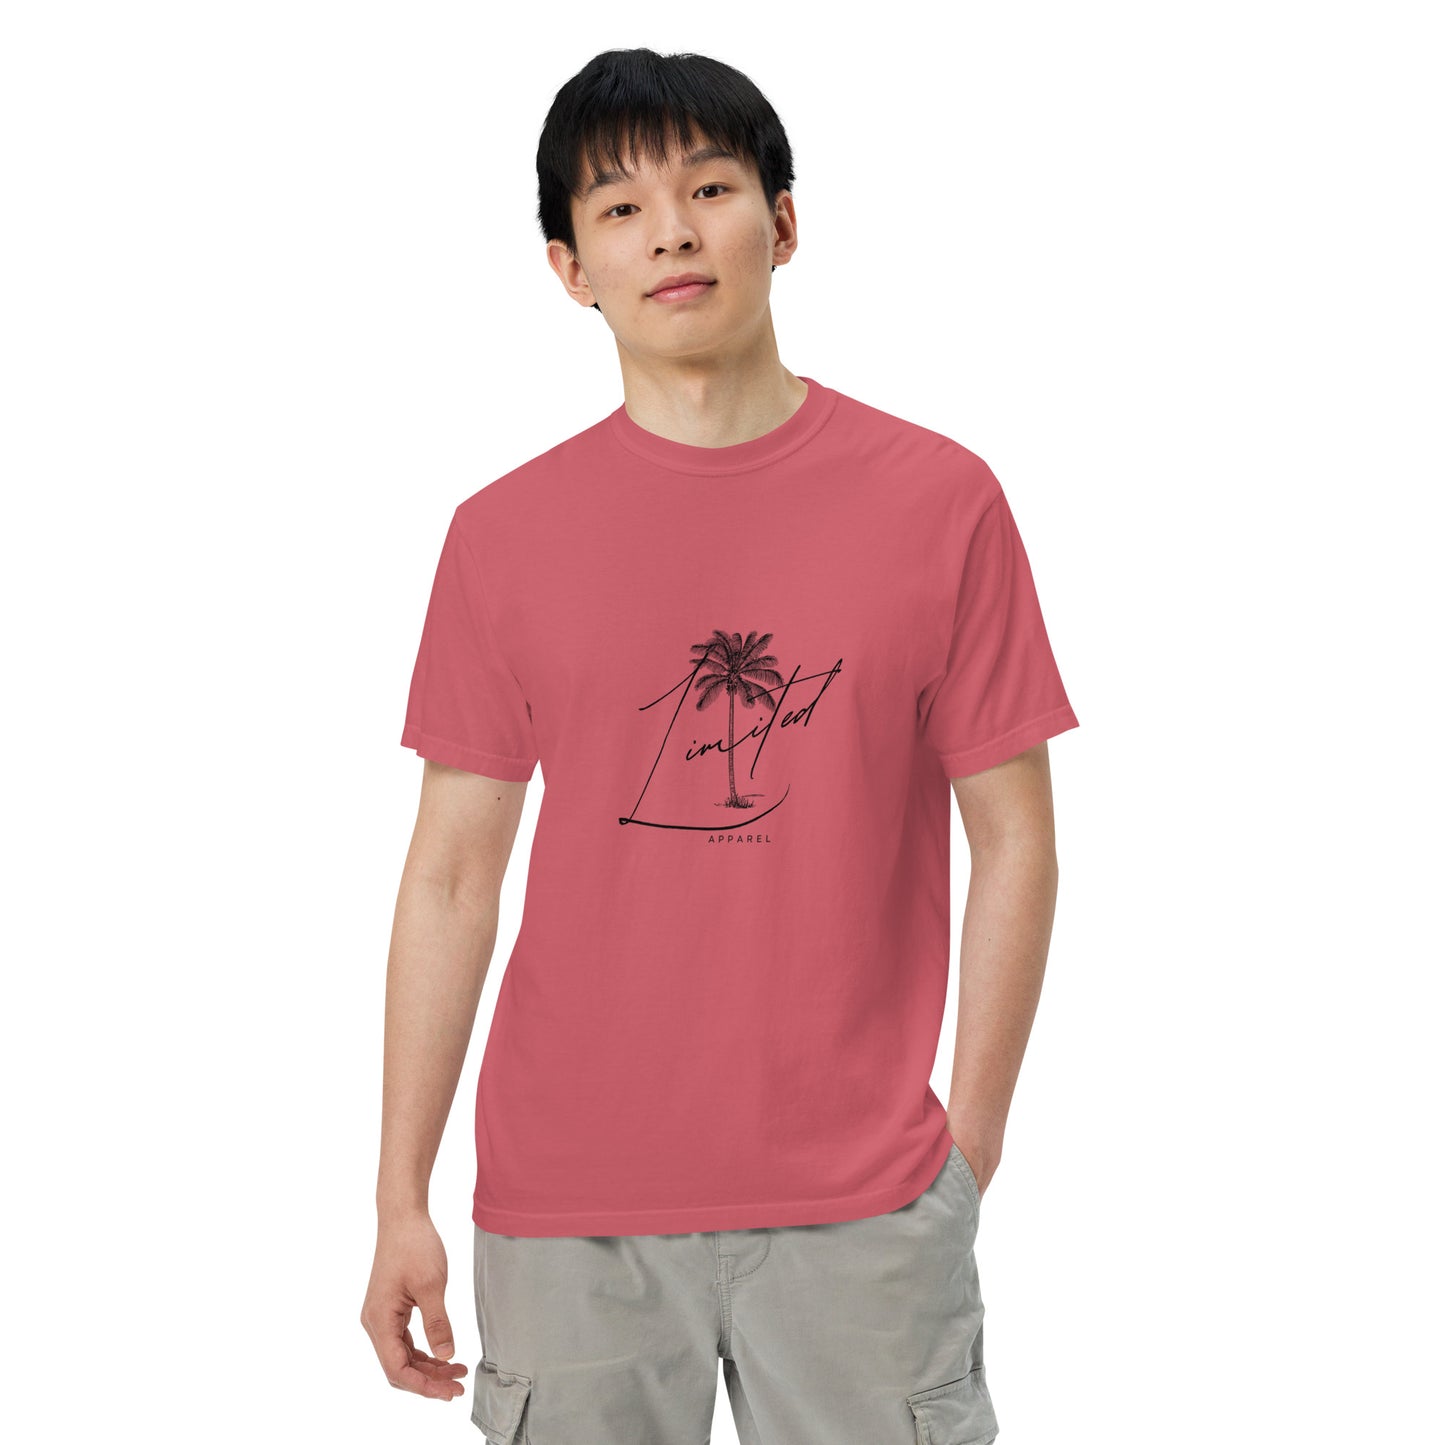 Limited Unisex garment-dyed heavyweight t-shirt